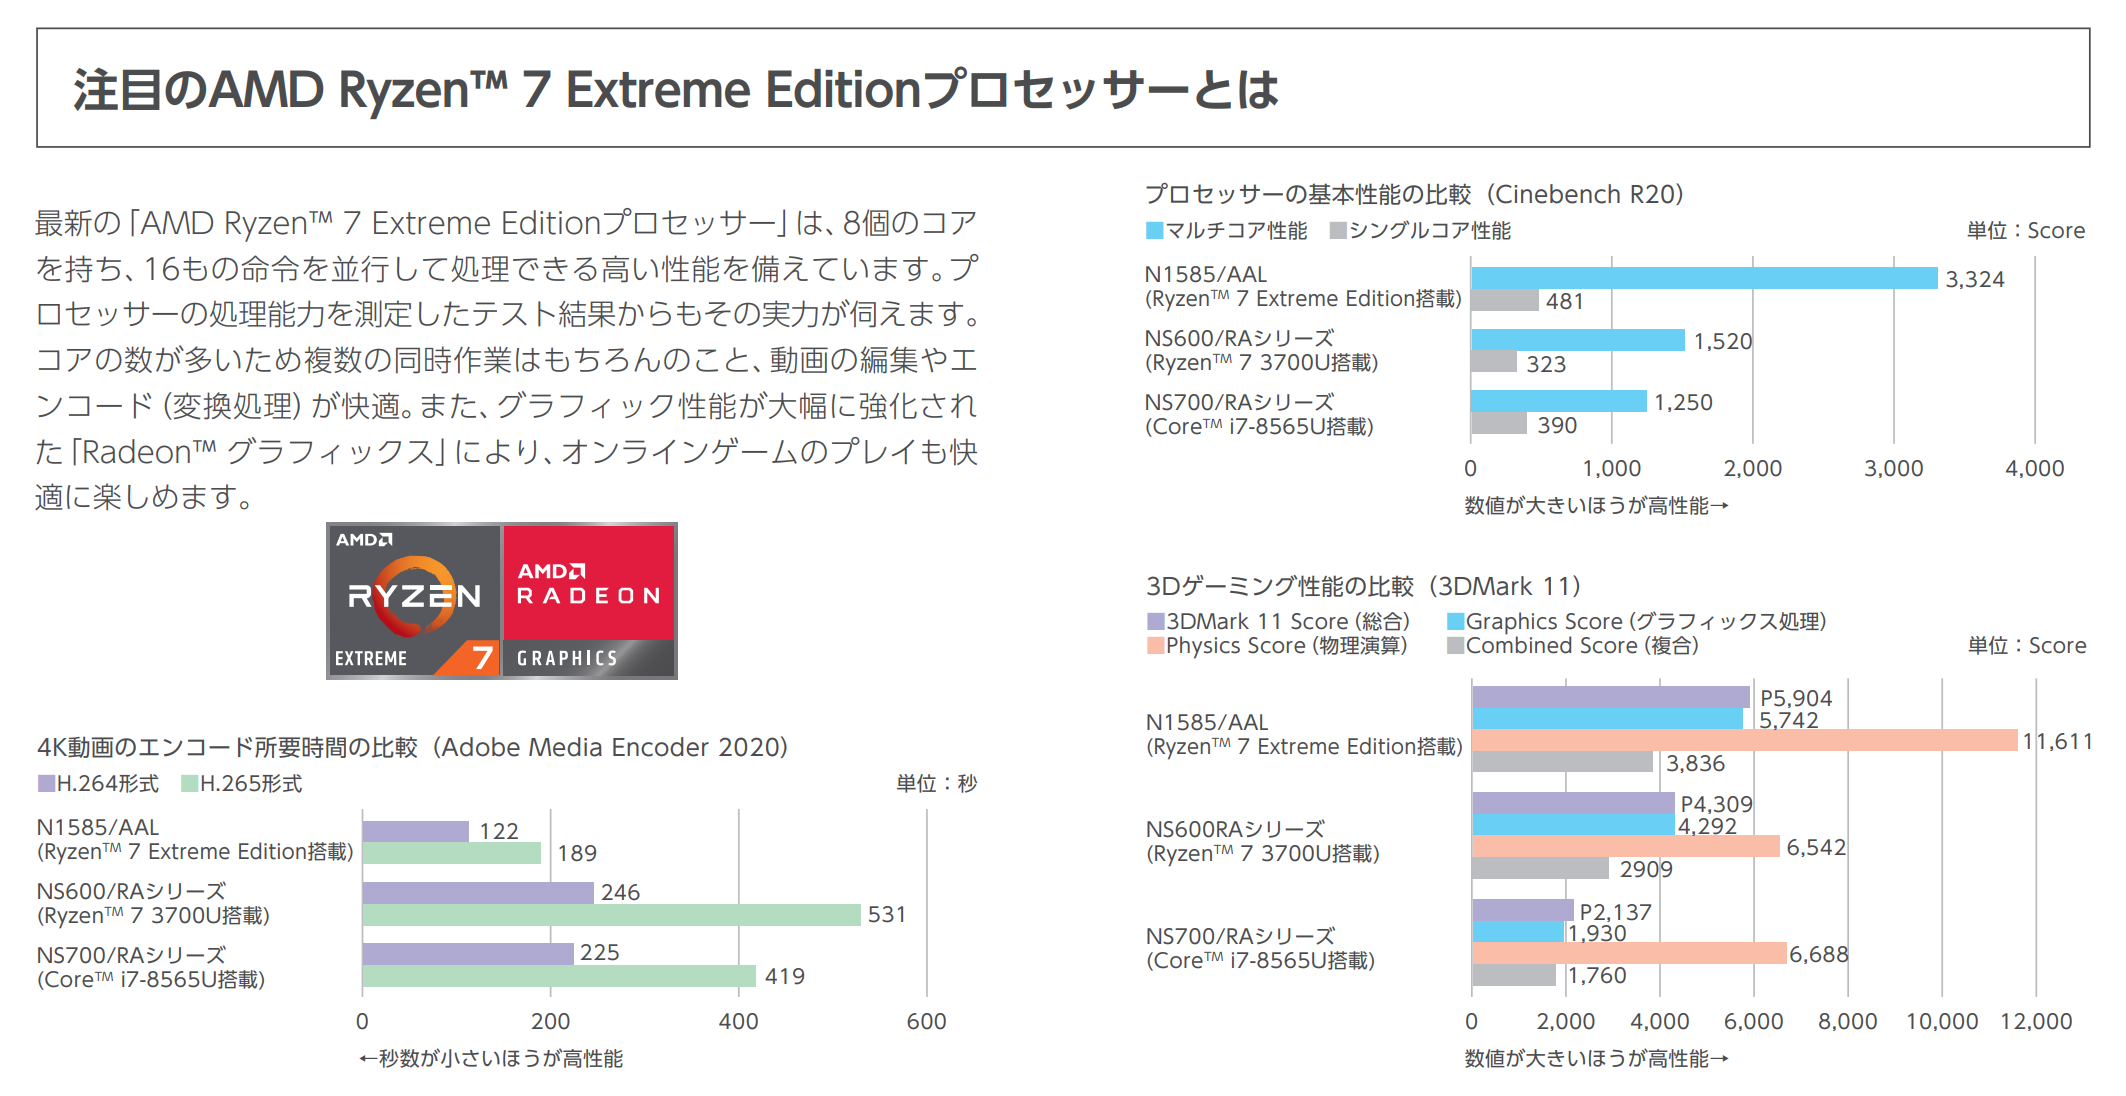 Ryzen 7 Extreme Edition